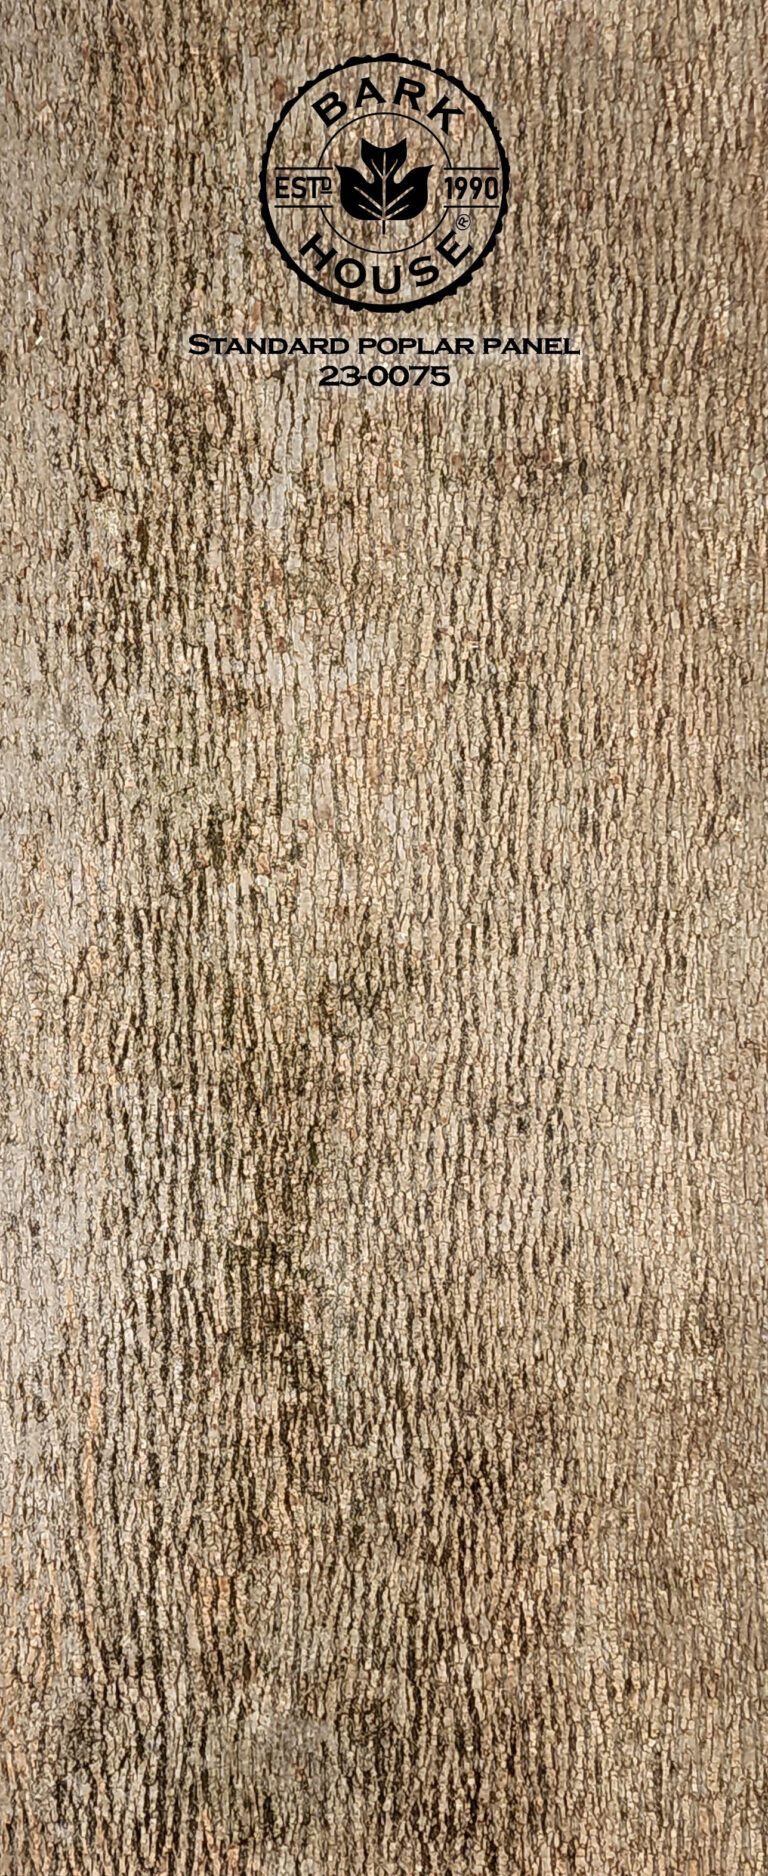 Bark House poplar bark panel SKU POPP-STD-23-0075